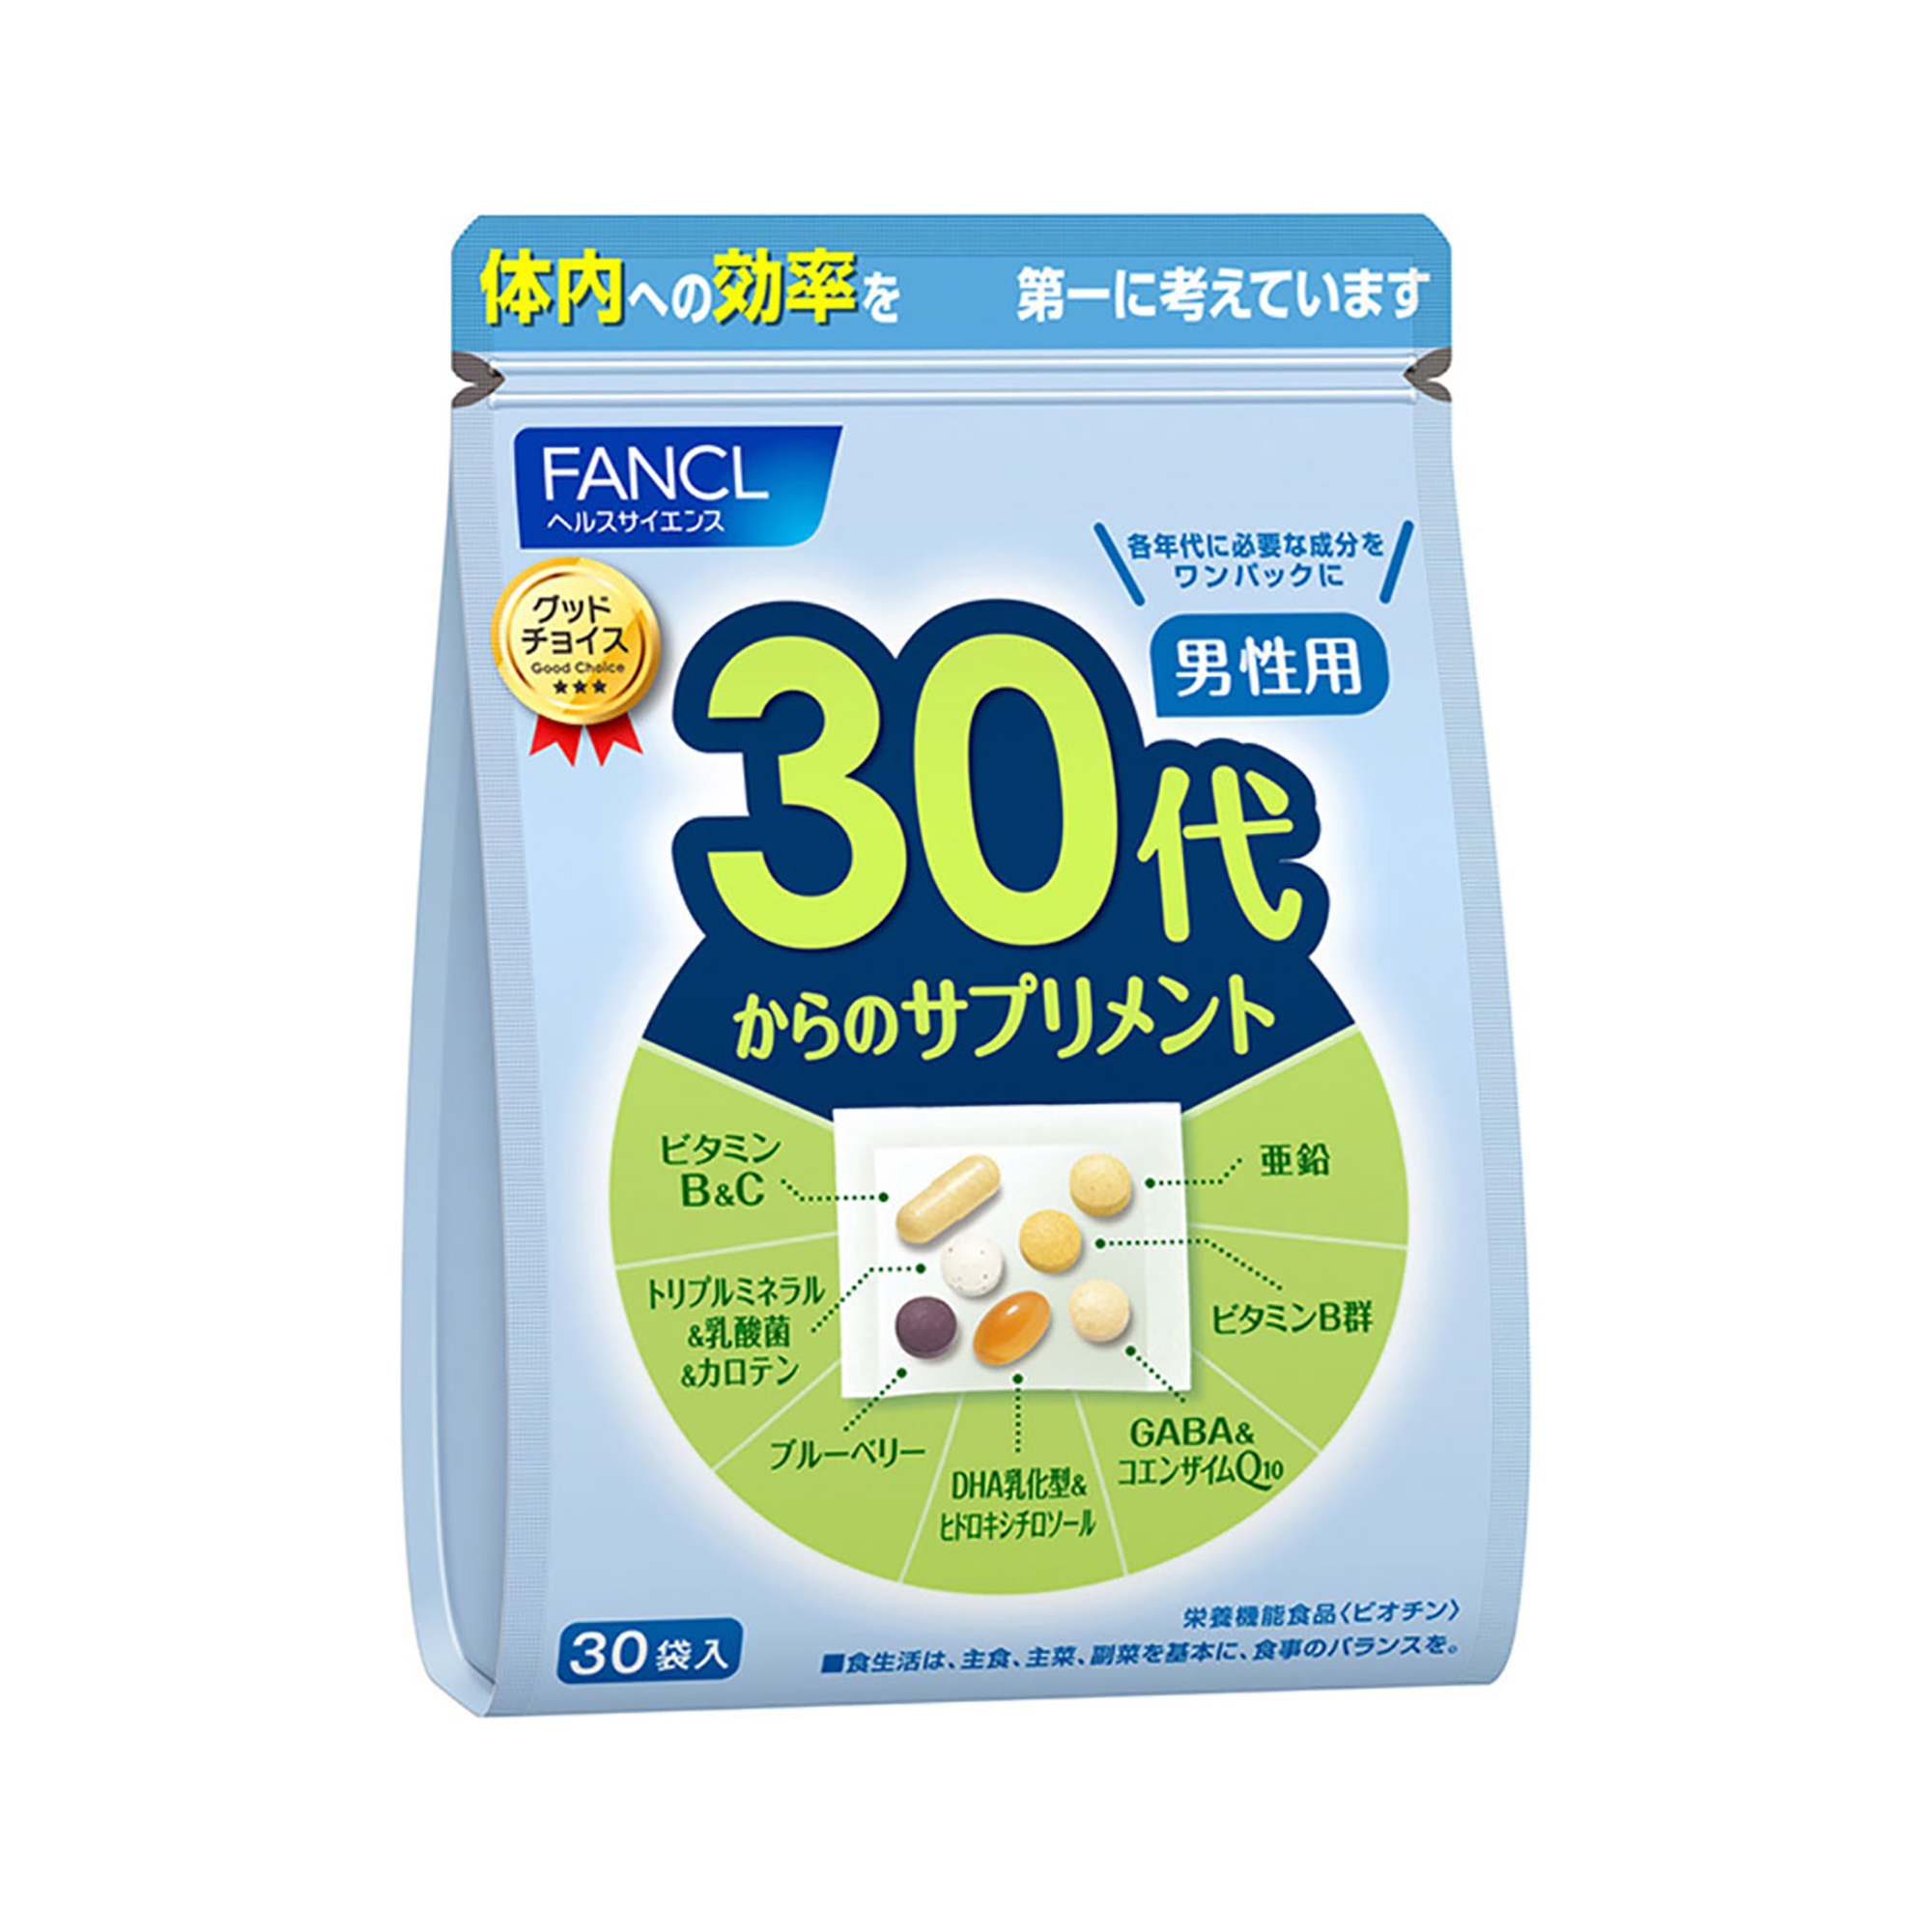 FANCL 30代男性綜合營養包 7粒×30袋